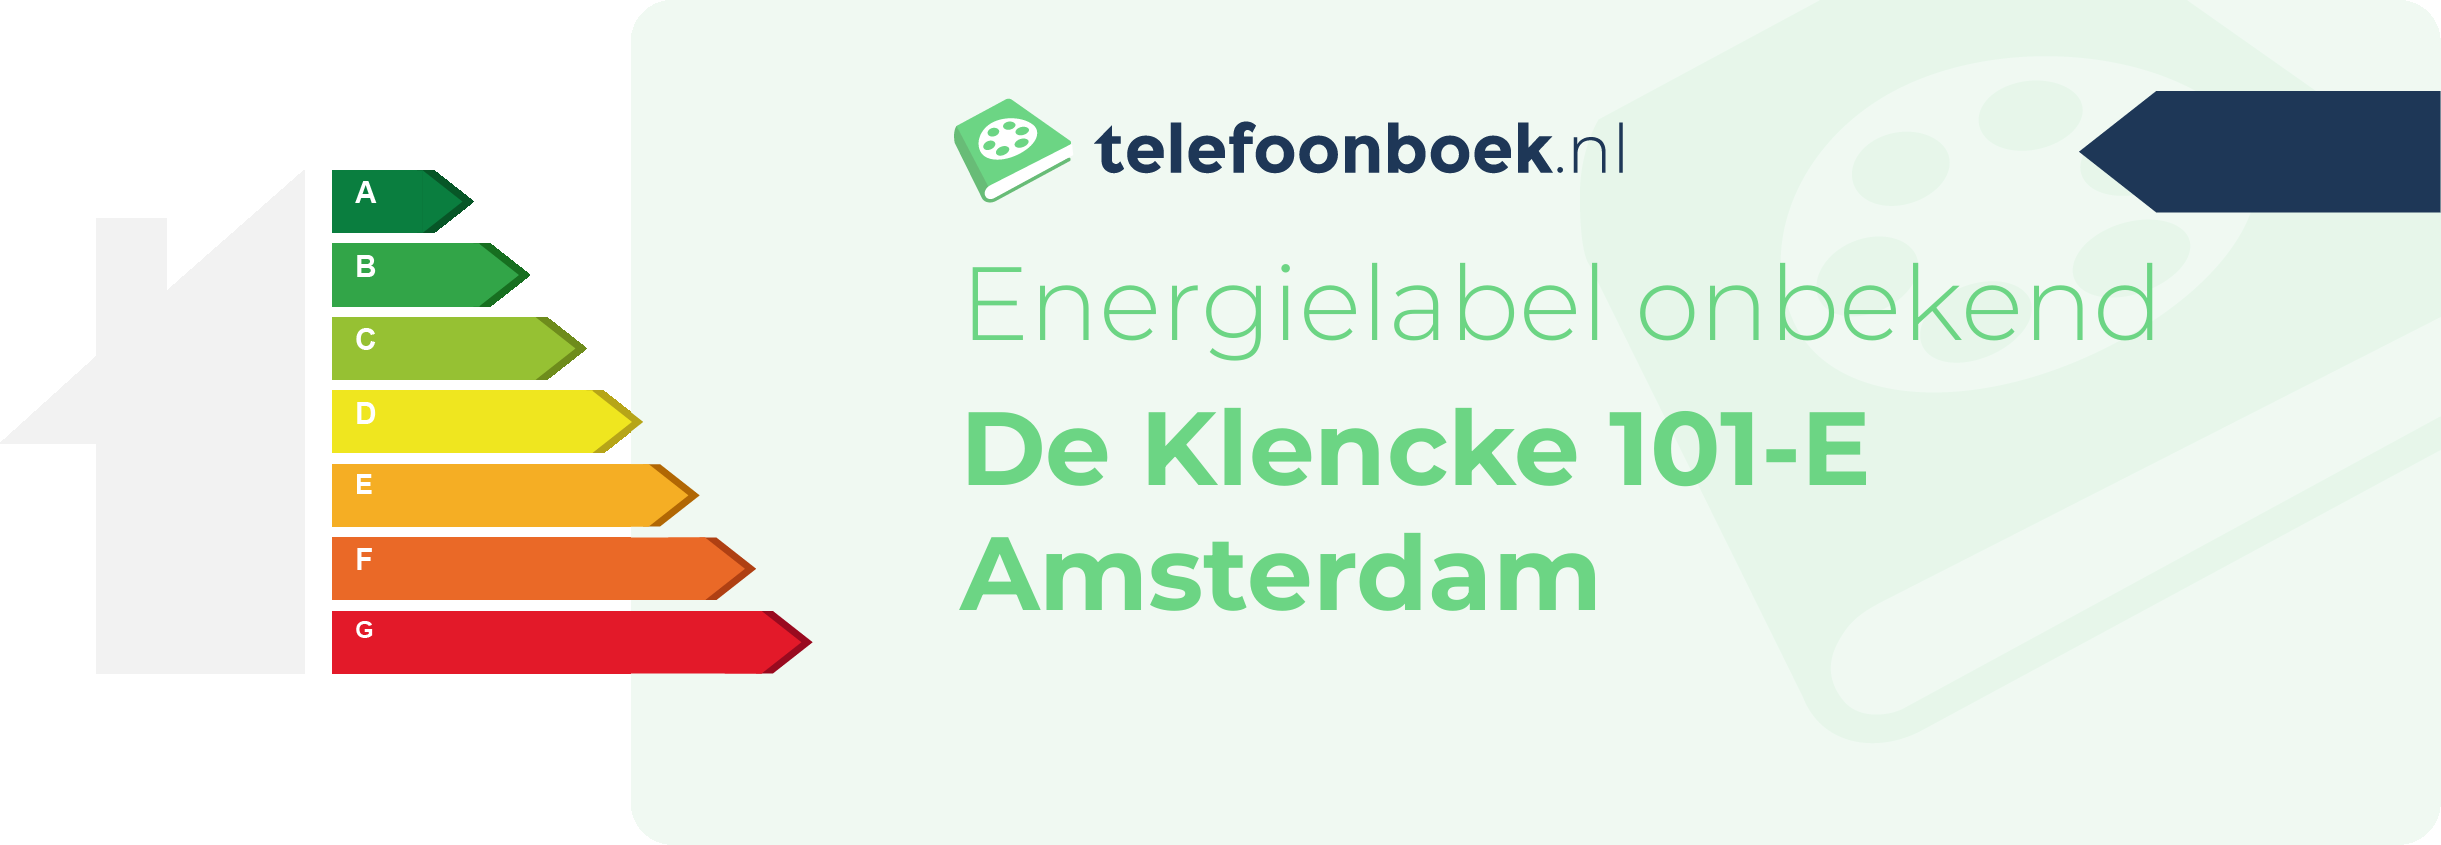 Energielabel De Klencke 101-E Amsterdam